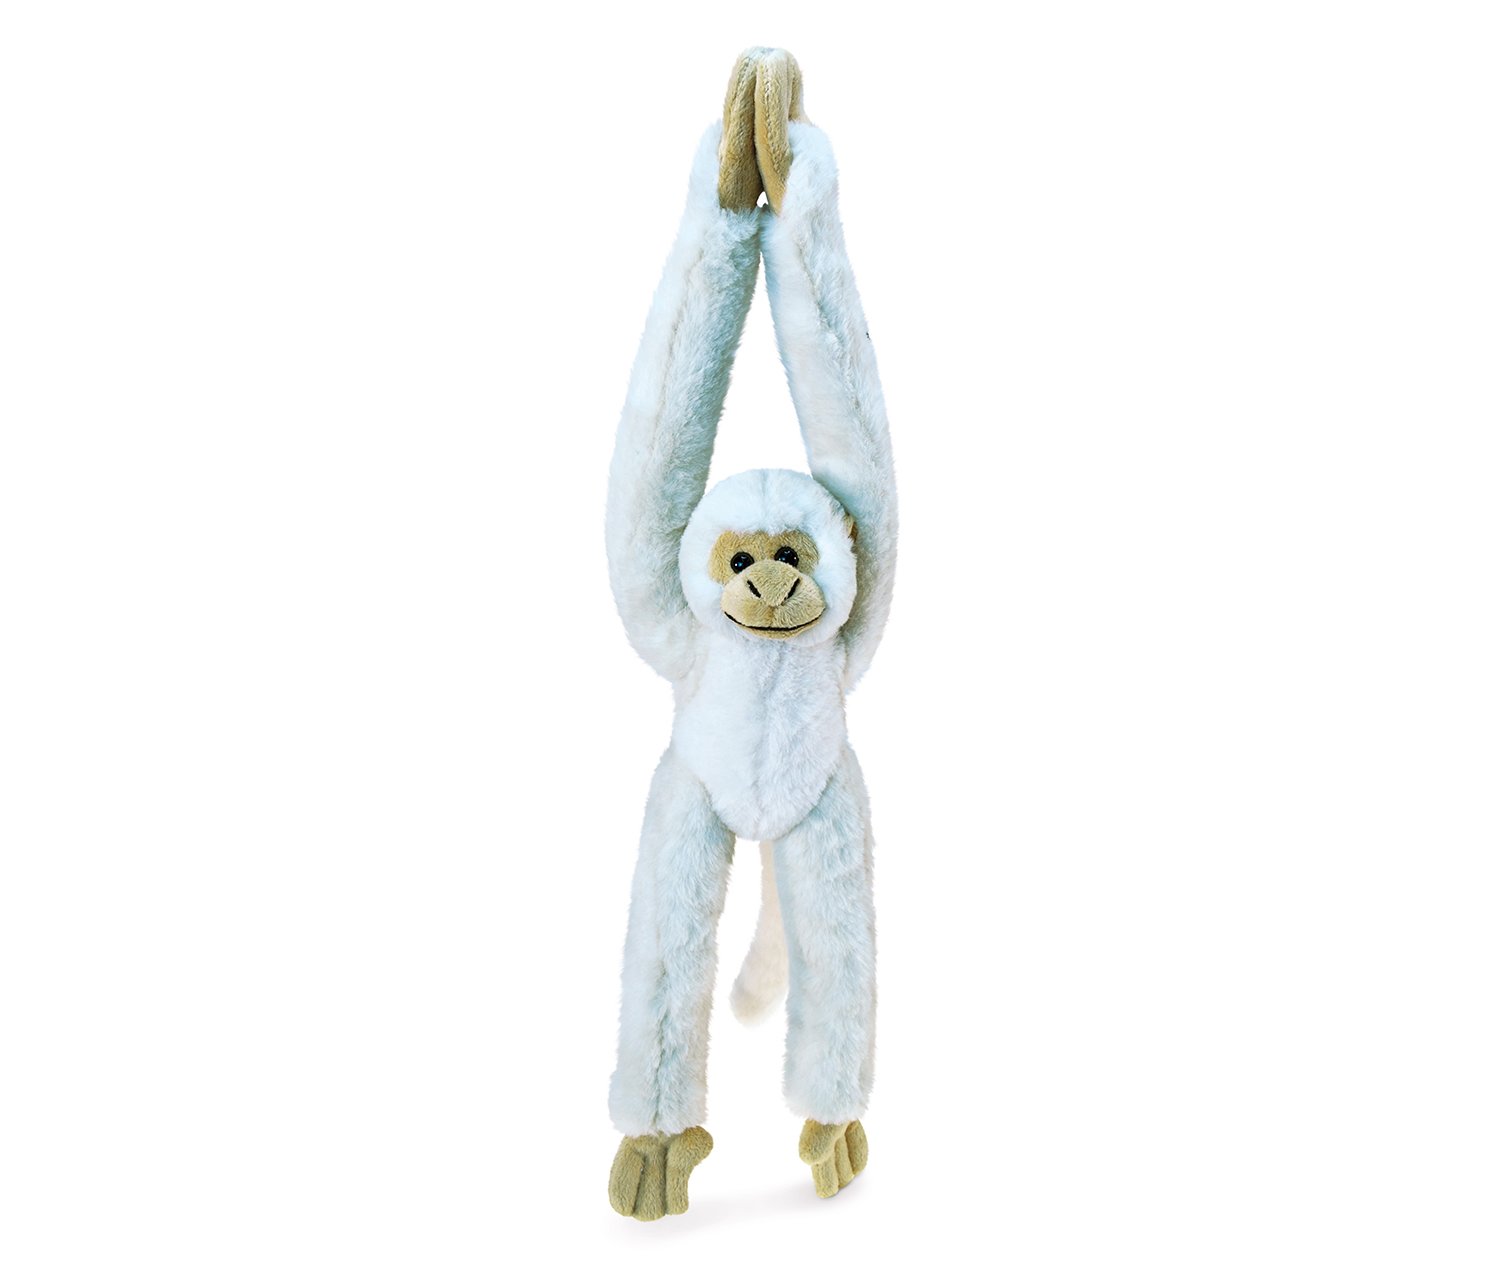 white monkey stuffed animal